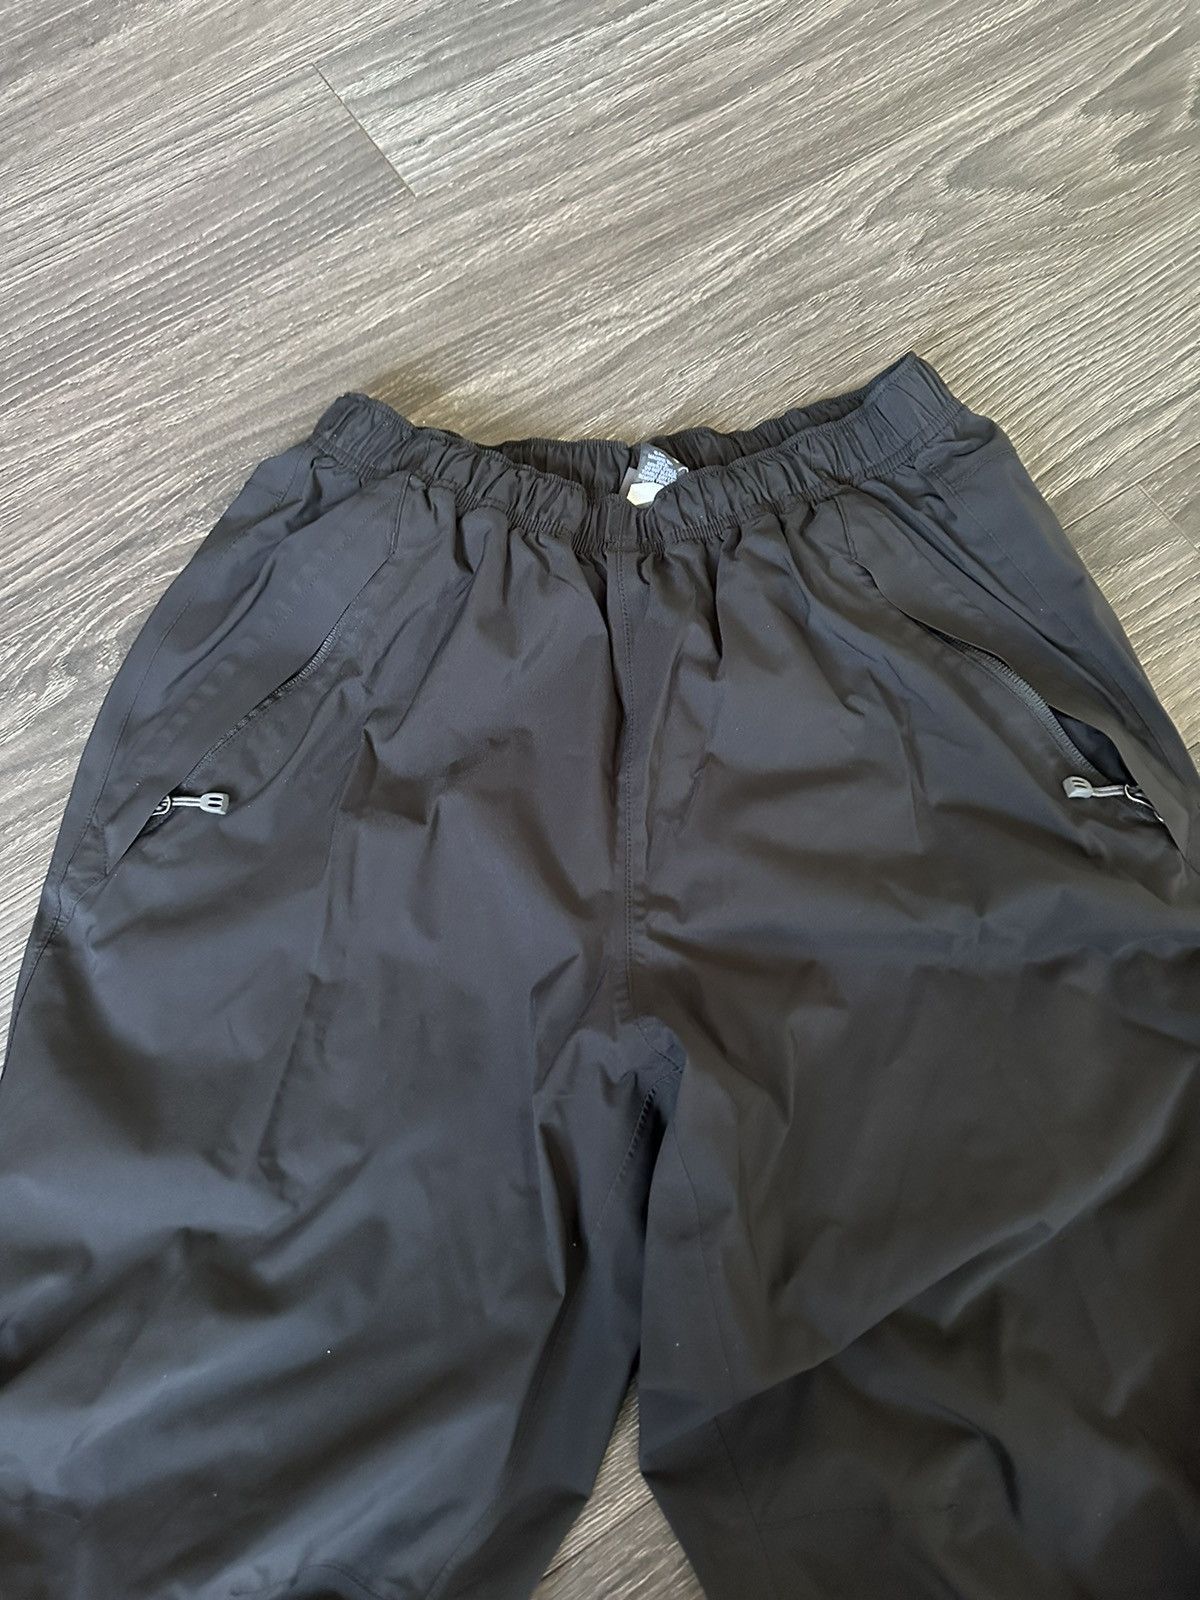 Rei REI XeroDry GTX Pants Size US 32 / EU 48 - 5 Thumbnail